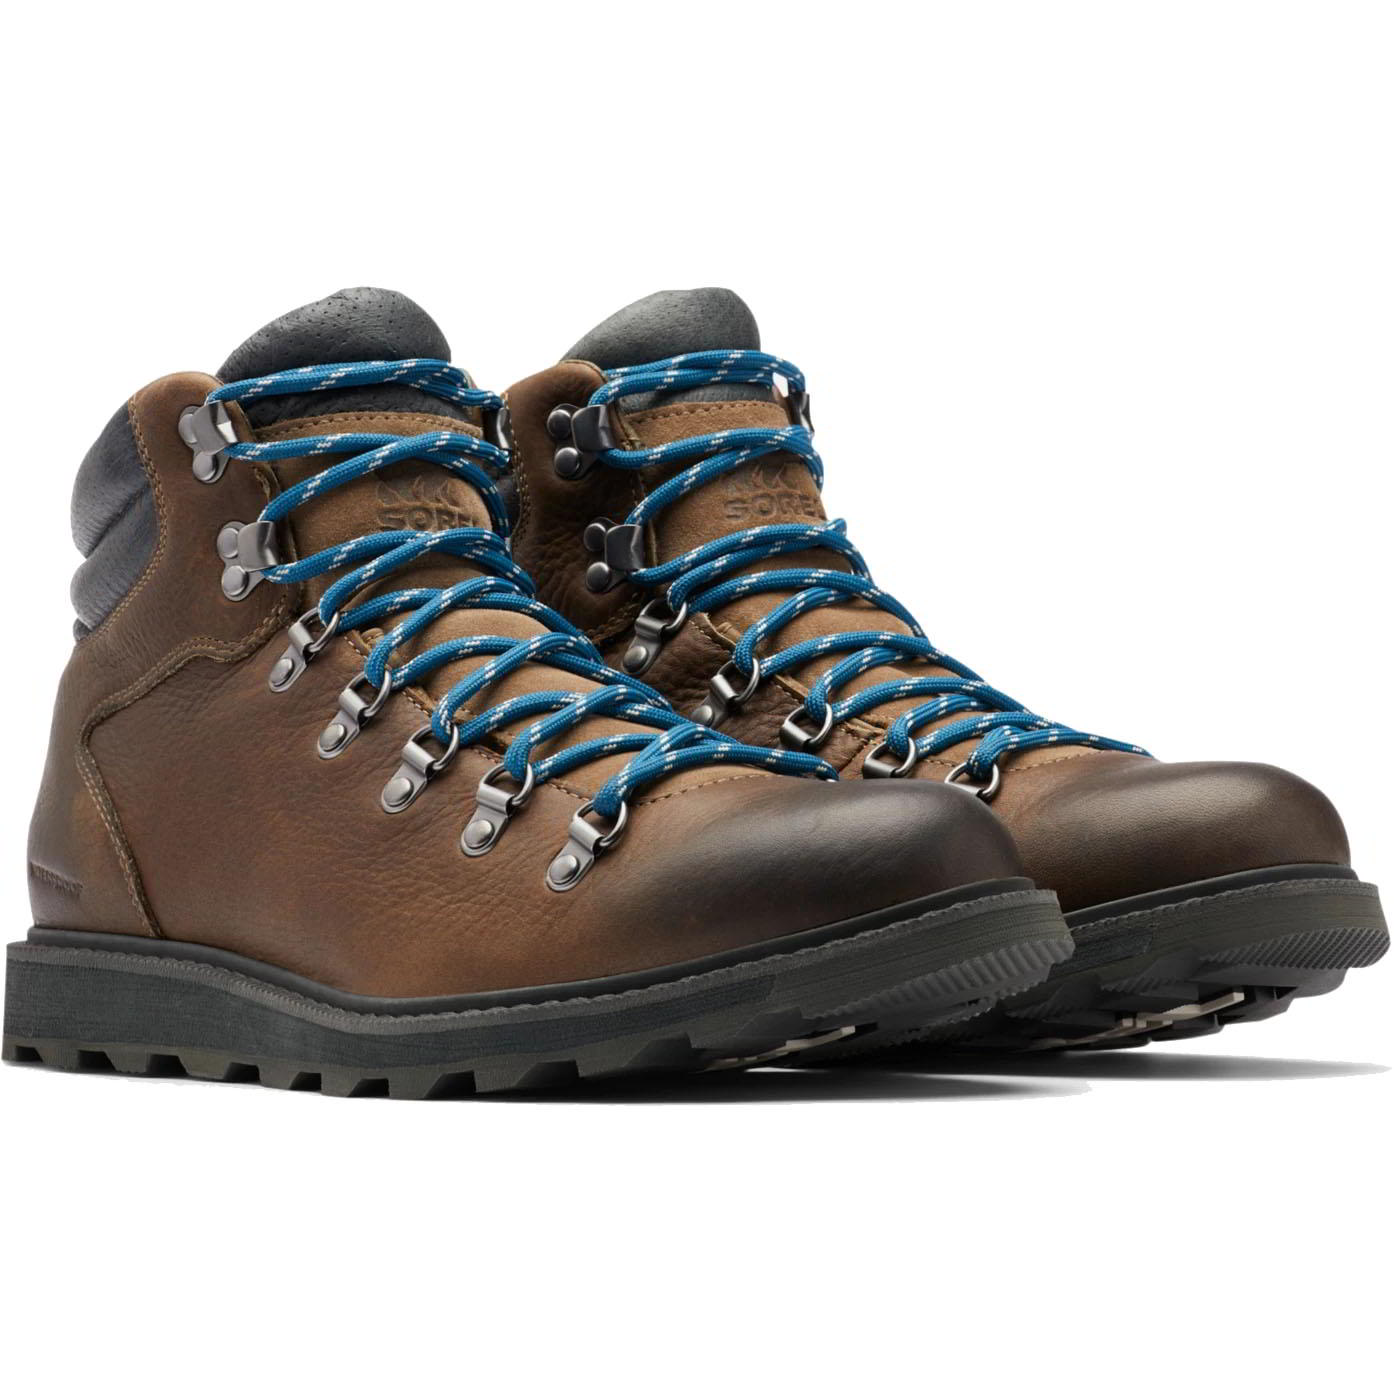 Sorel Mens Madson II Hiker WP Waterproof Boots - Saddle 2951